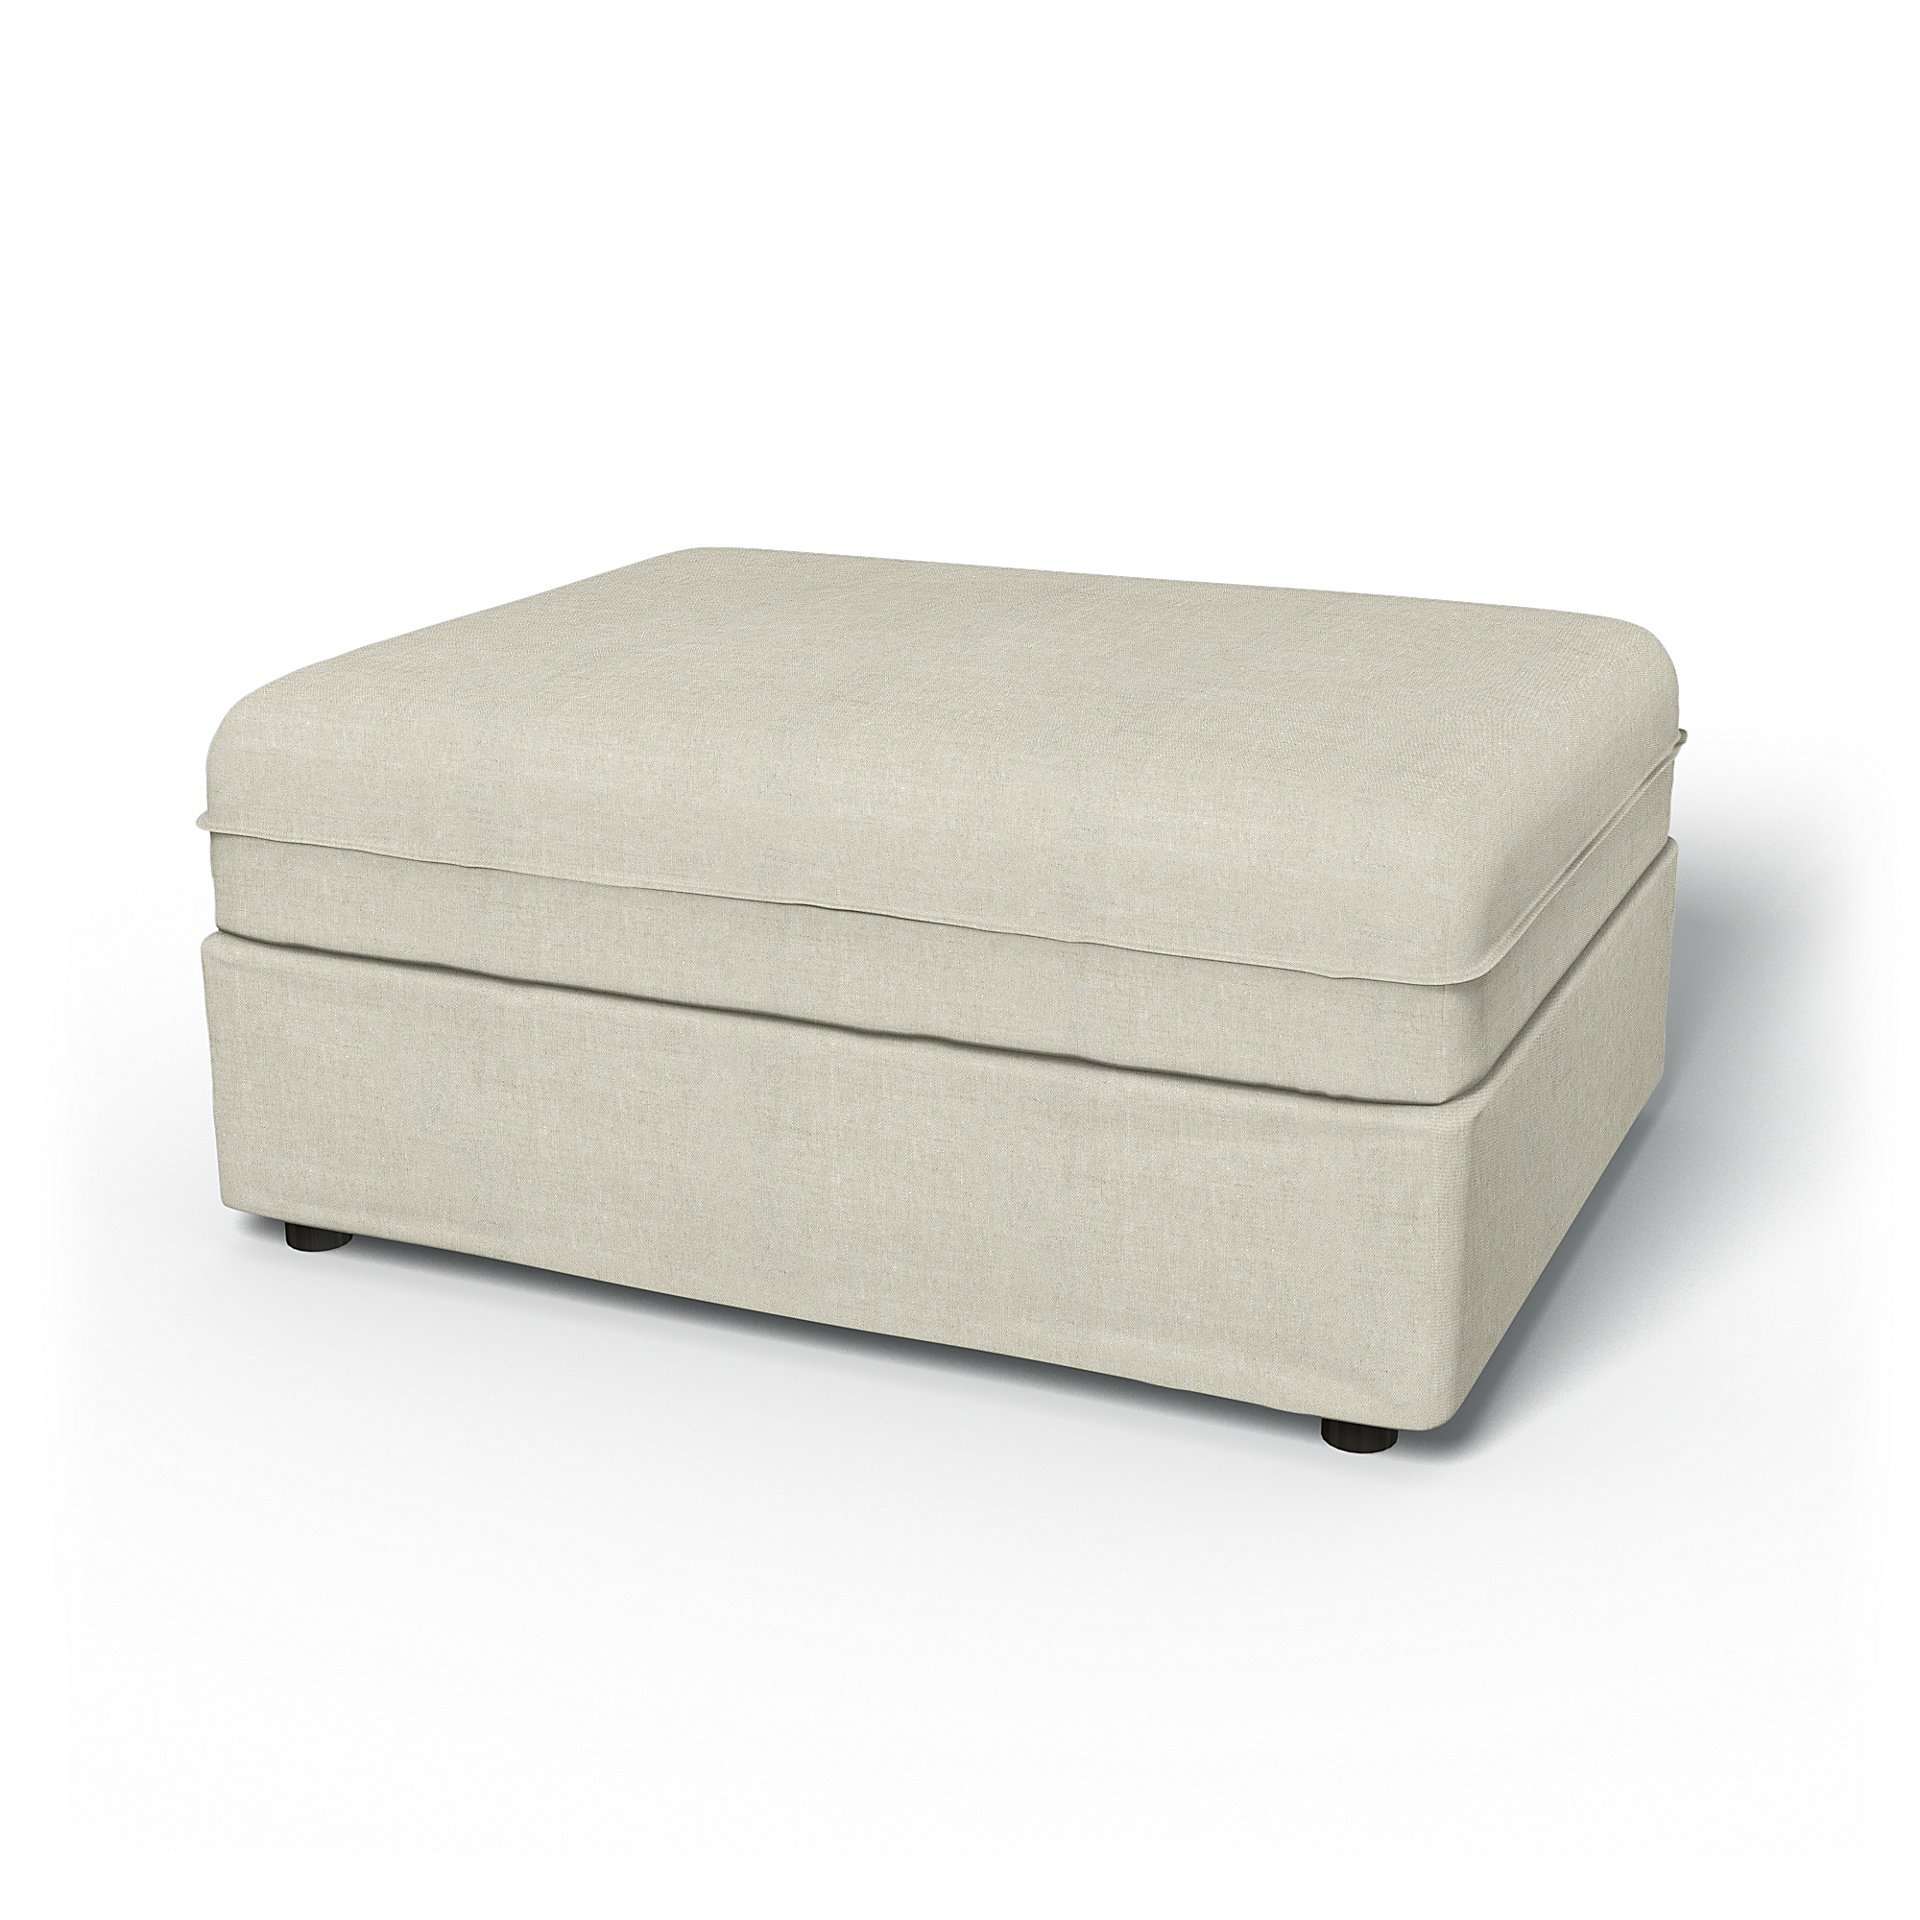 IKEA - Vallentuna Seat Module Cover 100x80cm 39x32in, Natural, Linen - Bemz